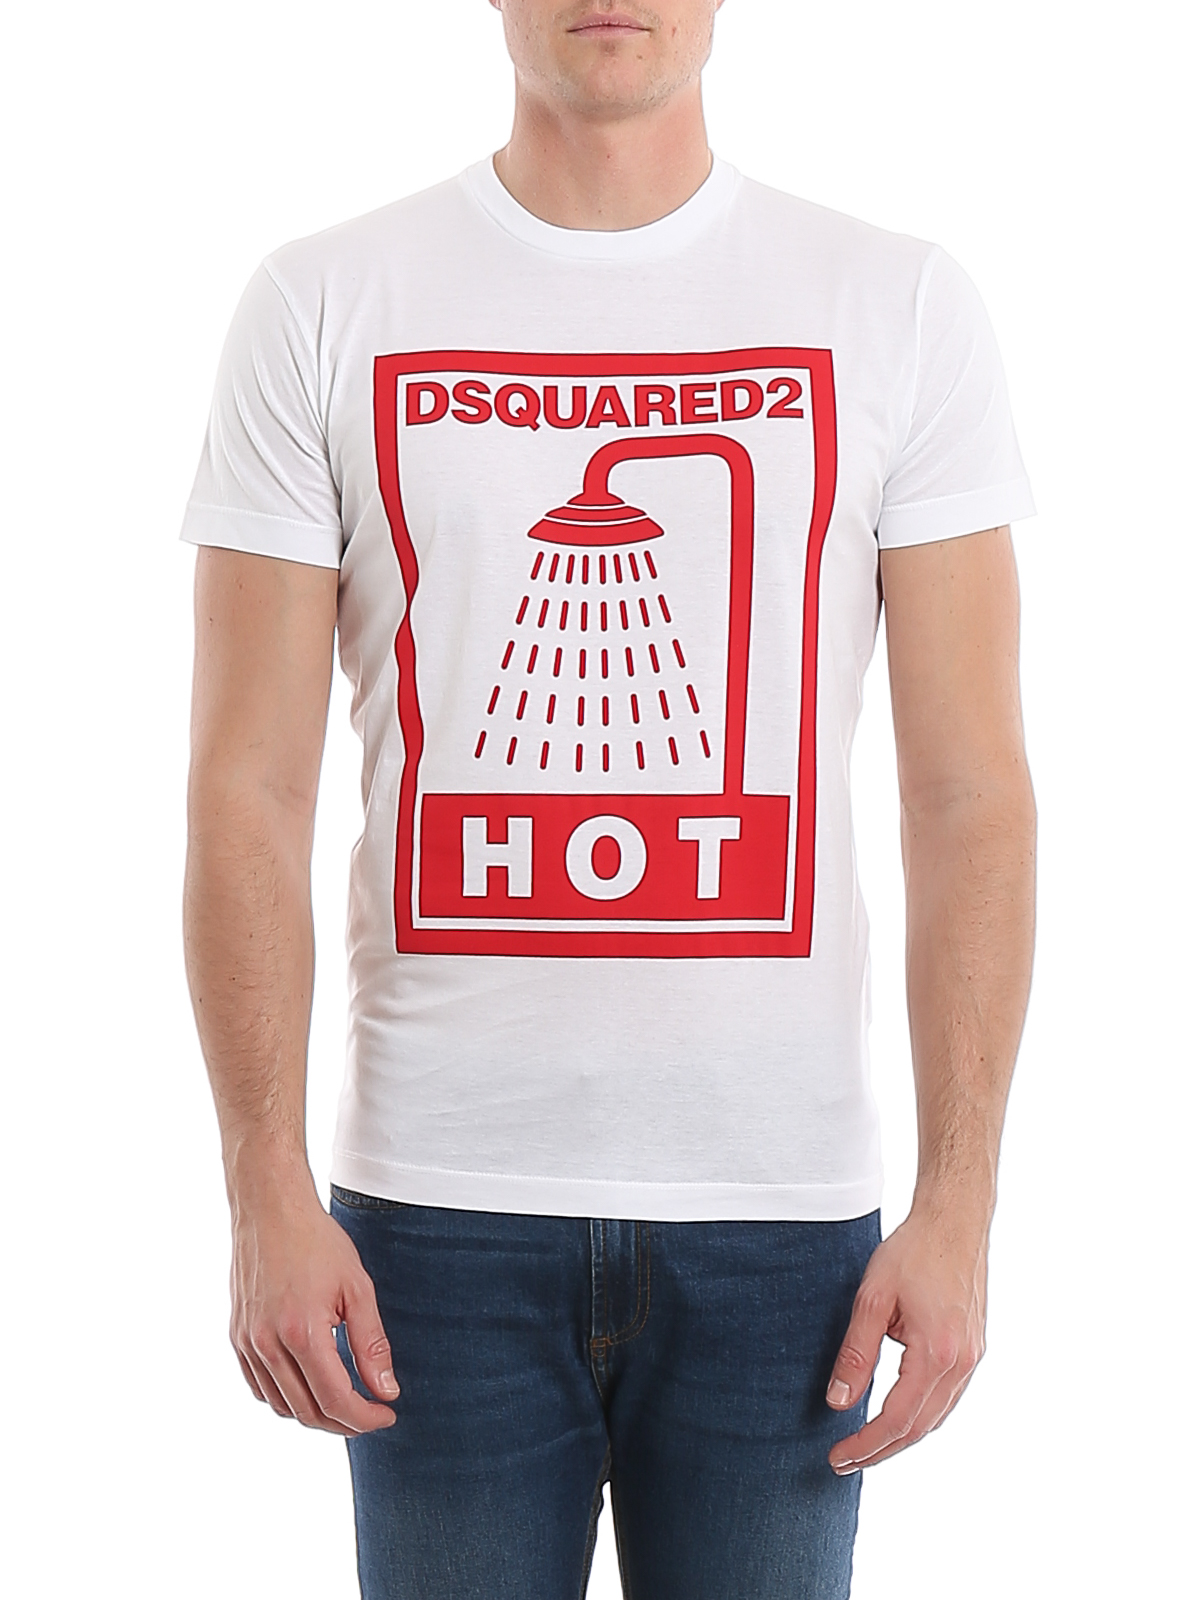 Tシャツ Dsquared2 - Tシャツ - 白 - S74GD0651S22427100 | iKRIX.com